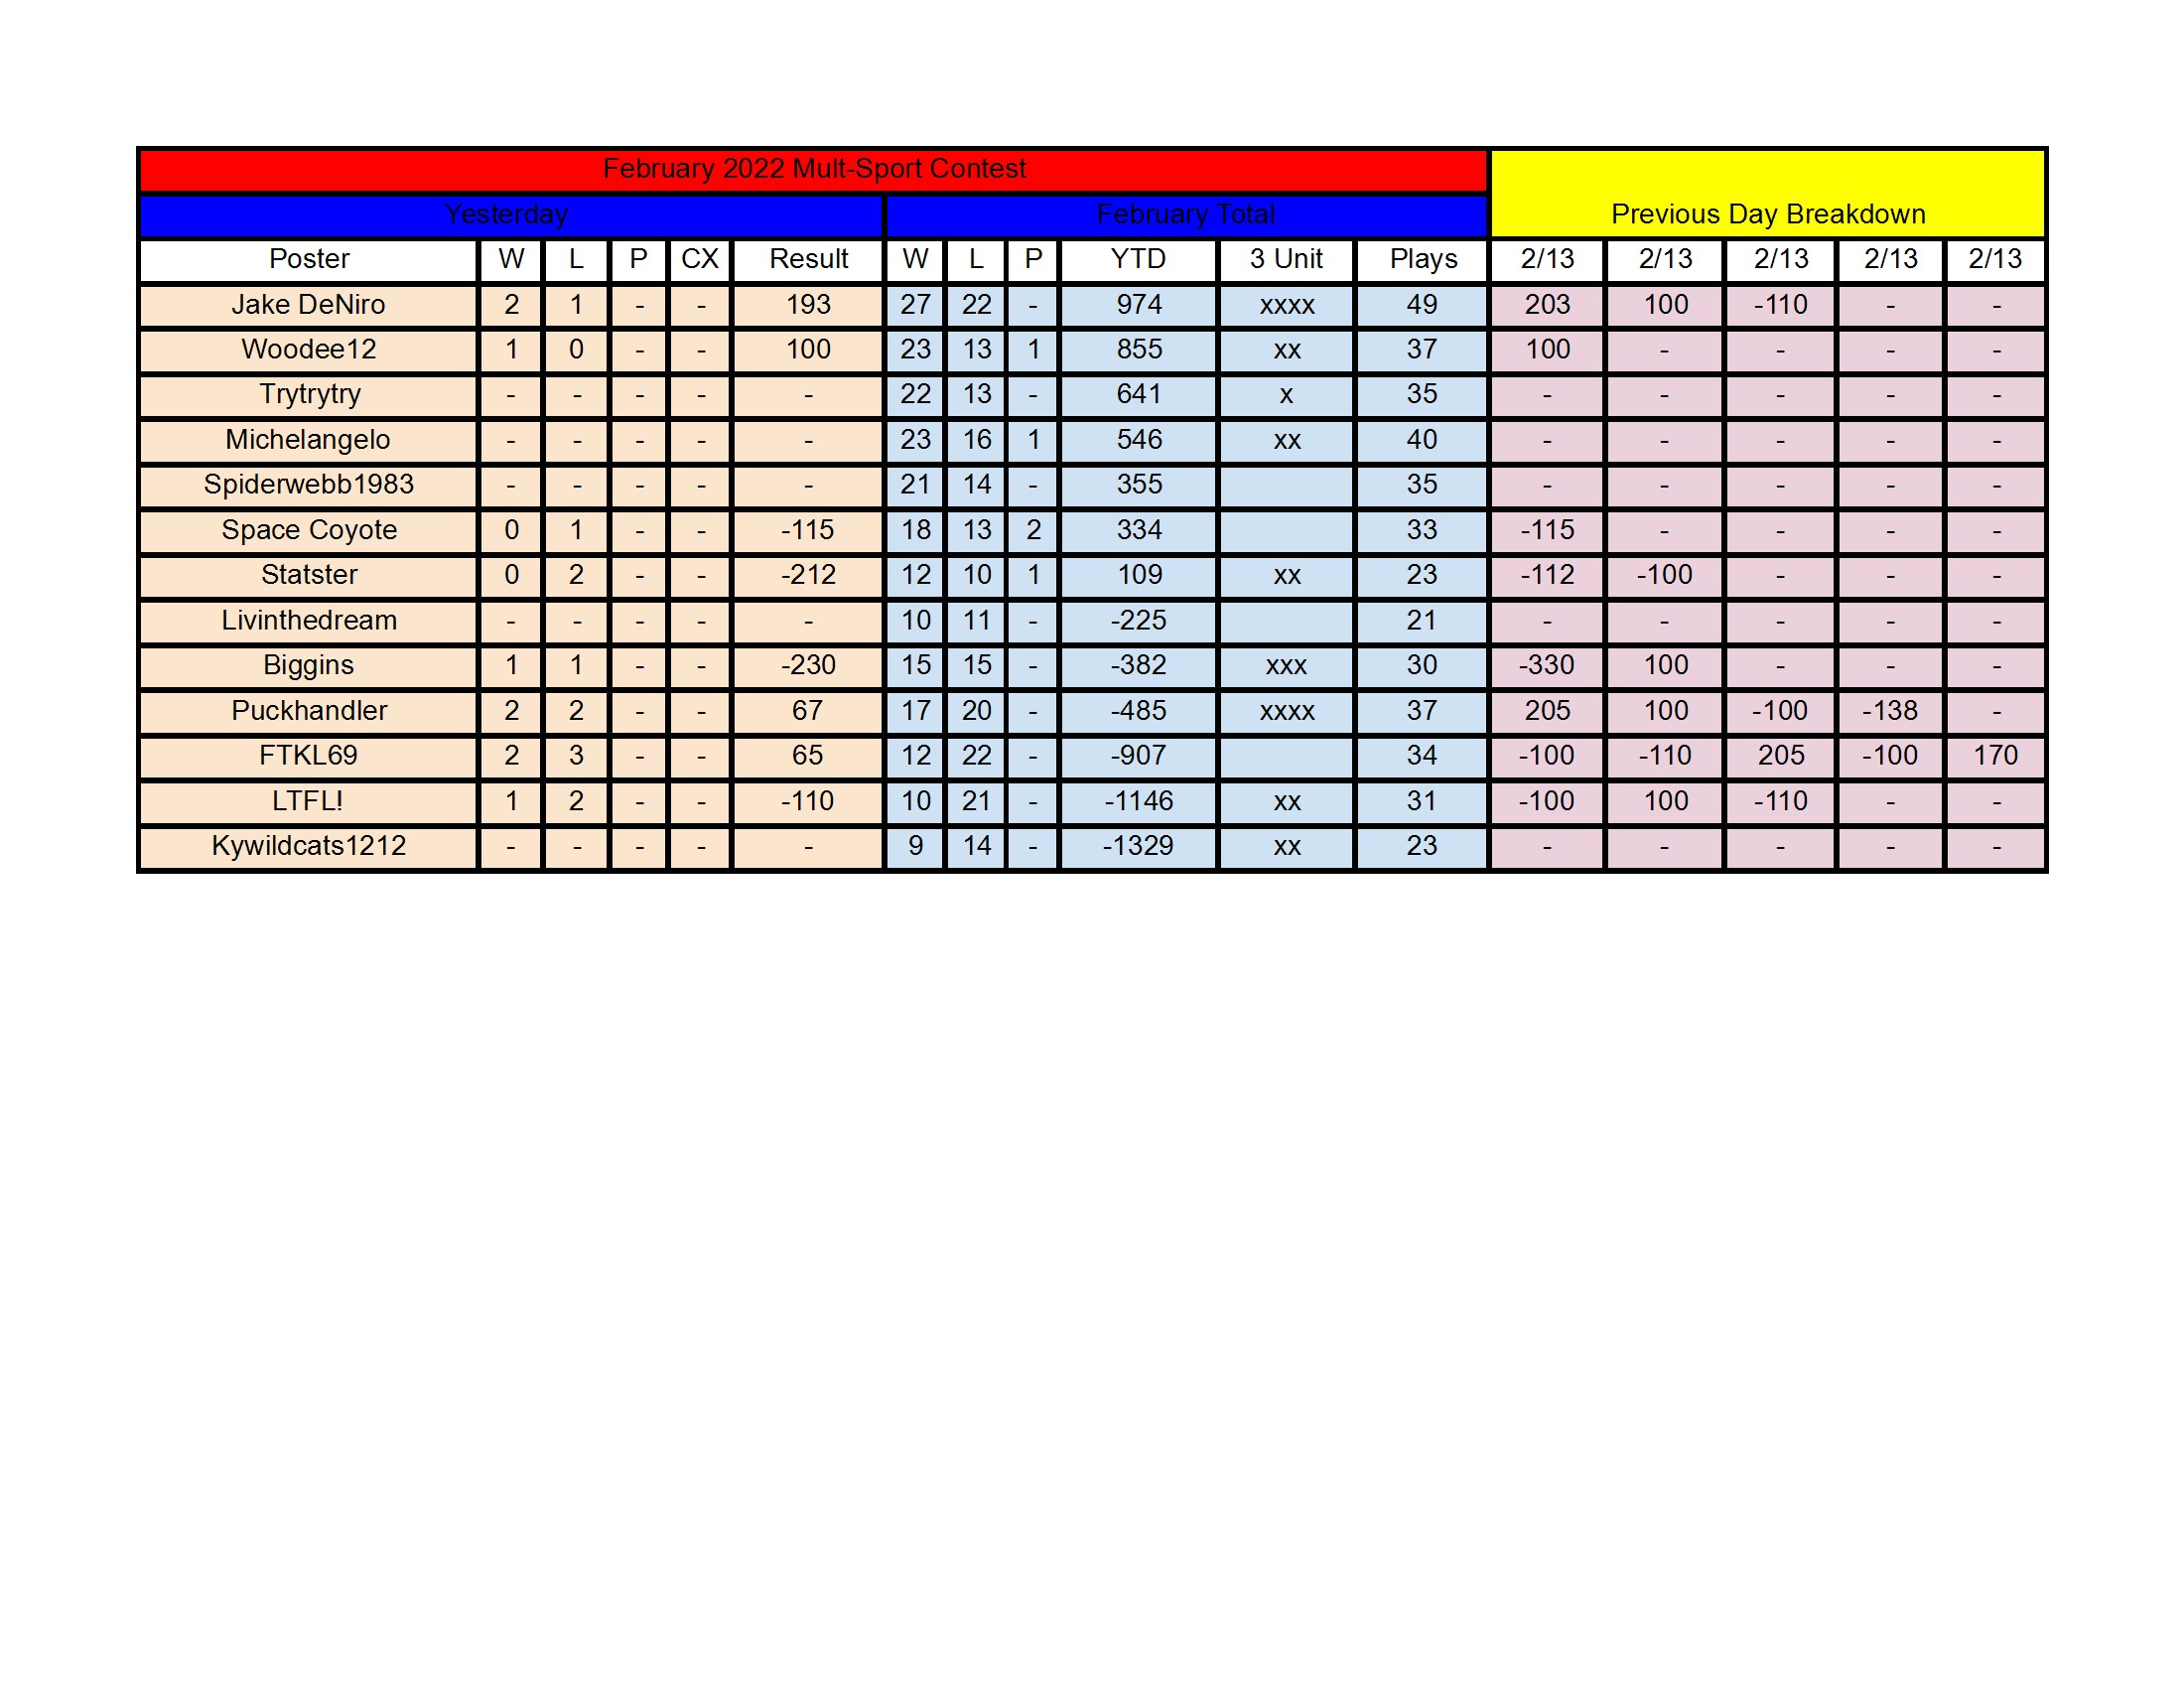 February Standings - 2_13 conv 1.jpeg